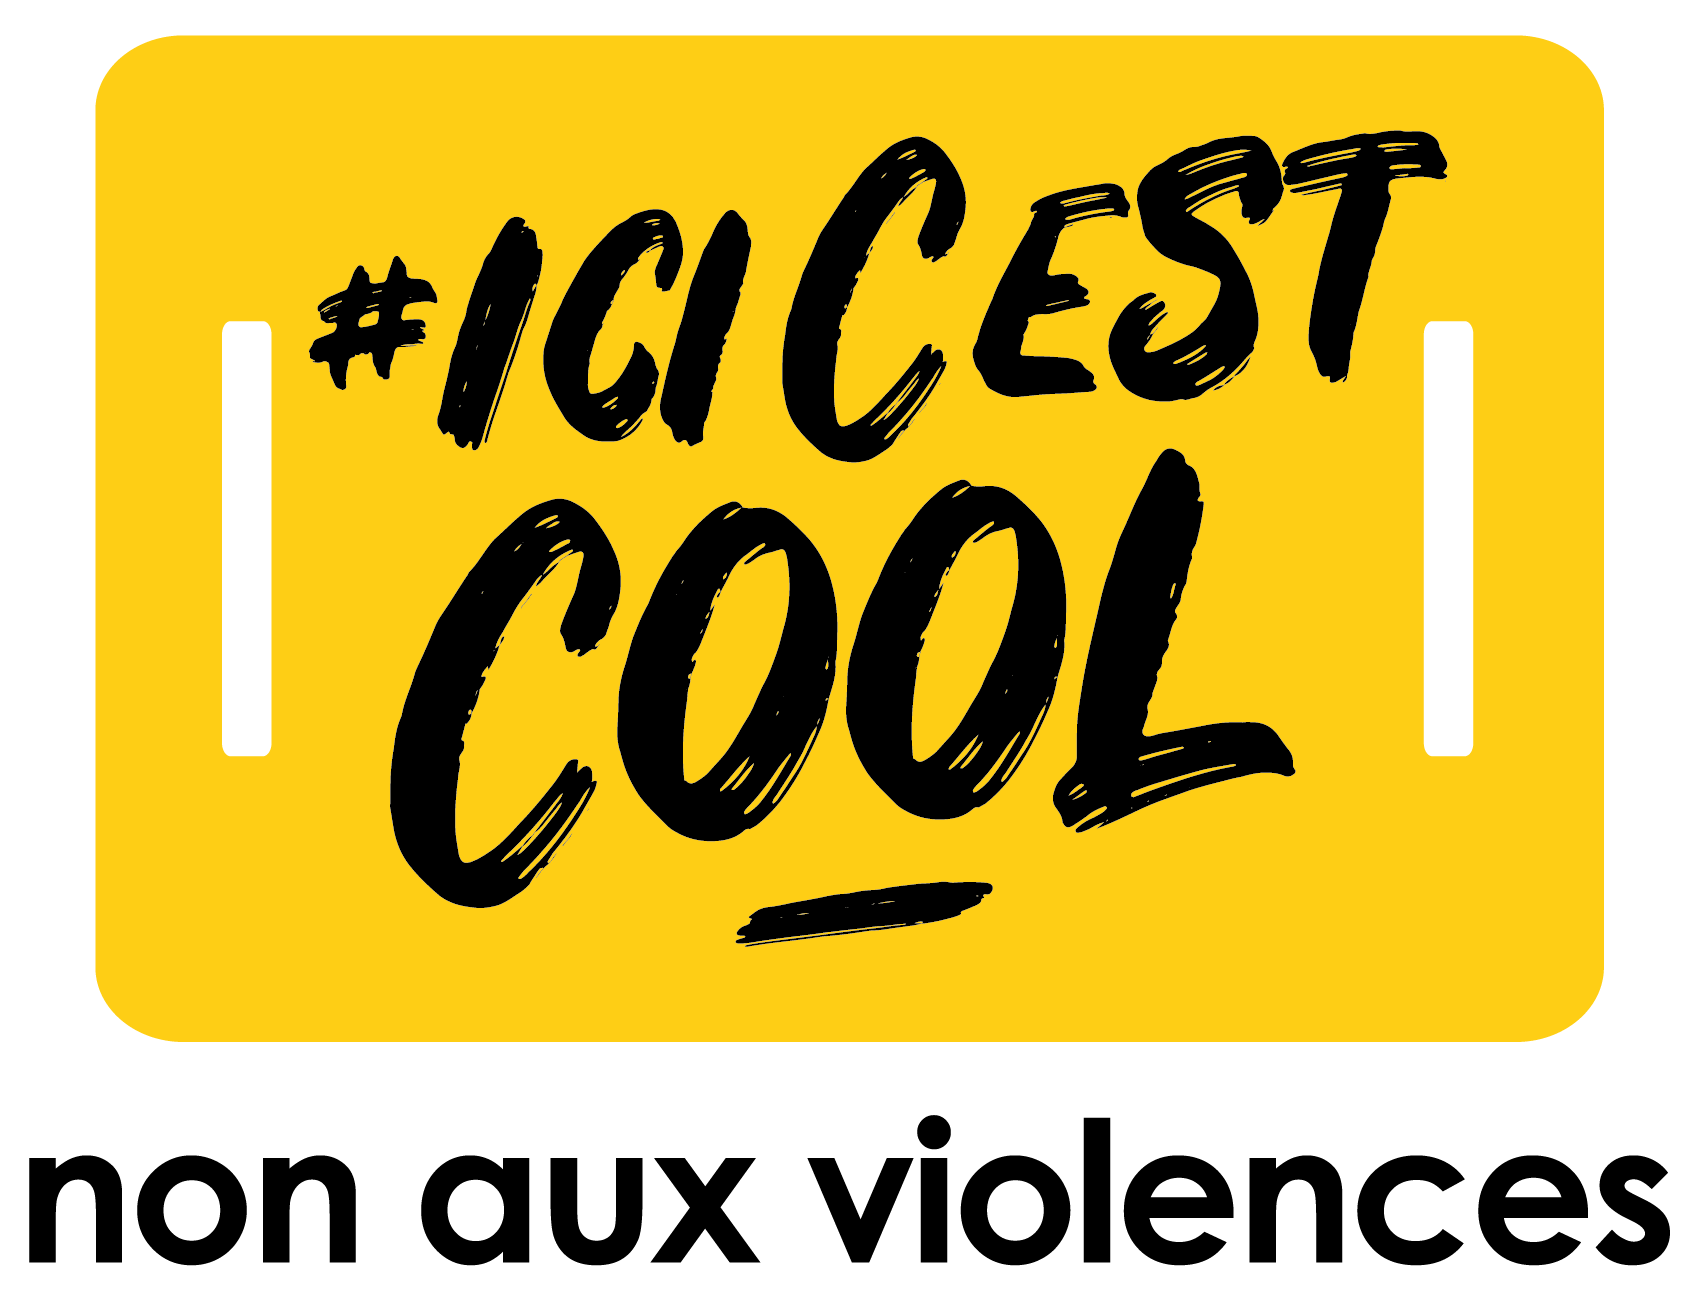 #IciCestCool